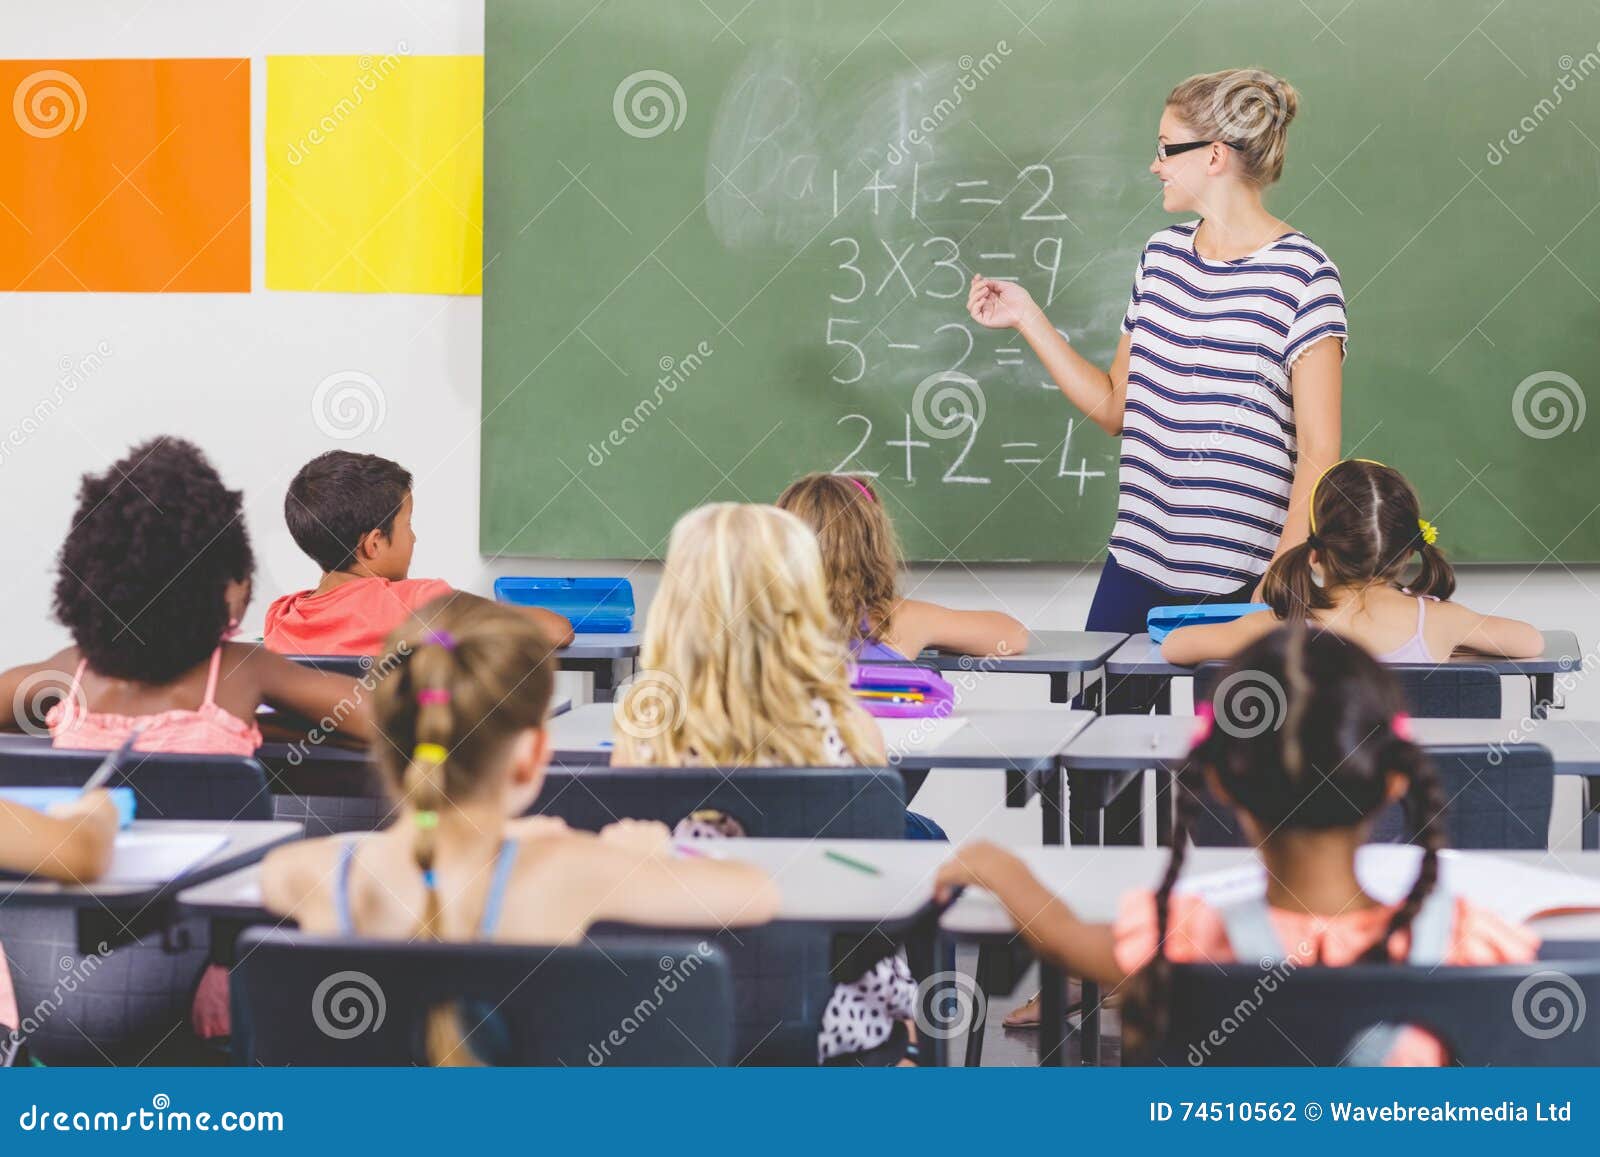 teacher teaching mathematics to school kids in classroom